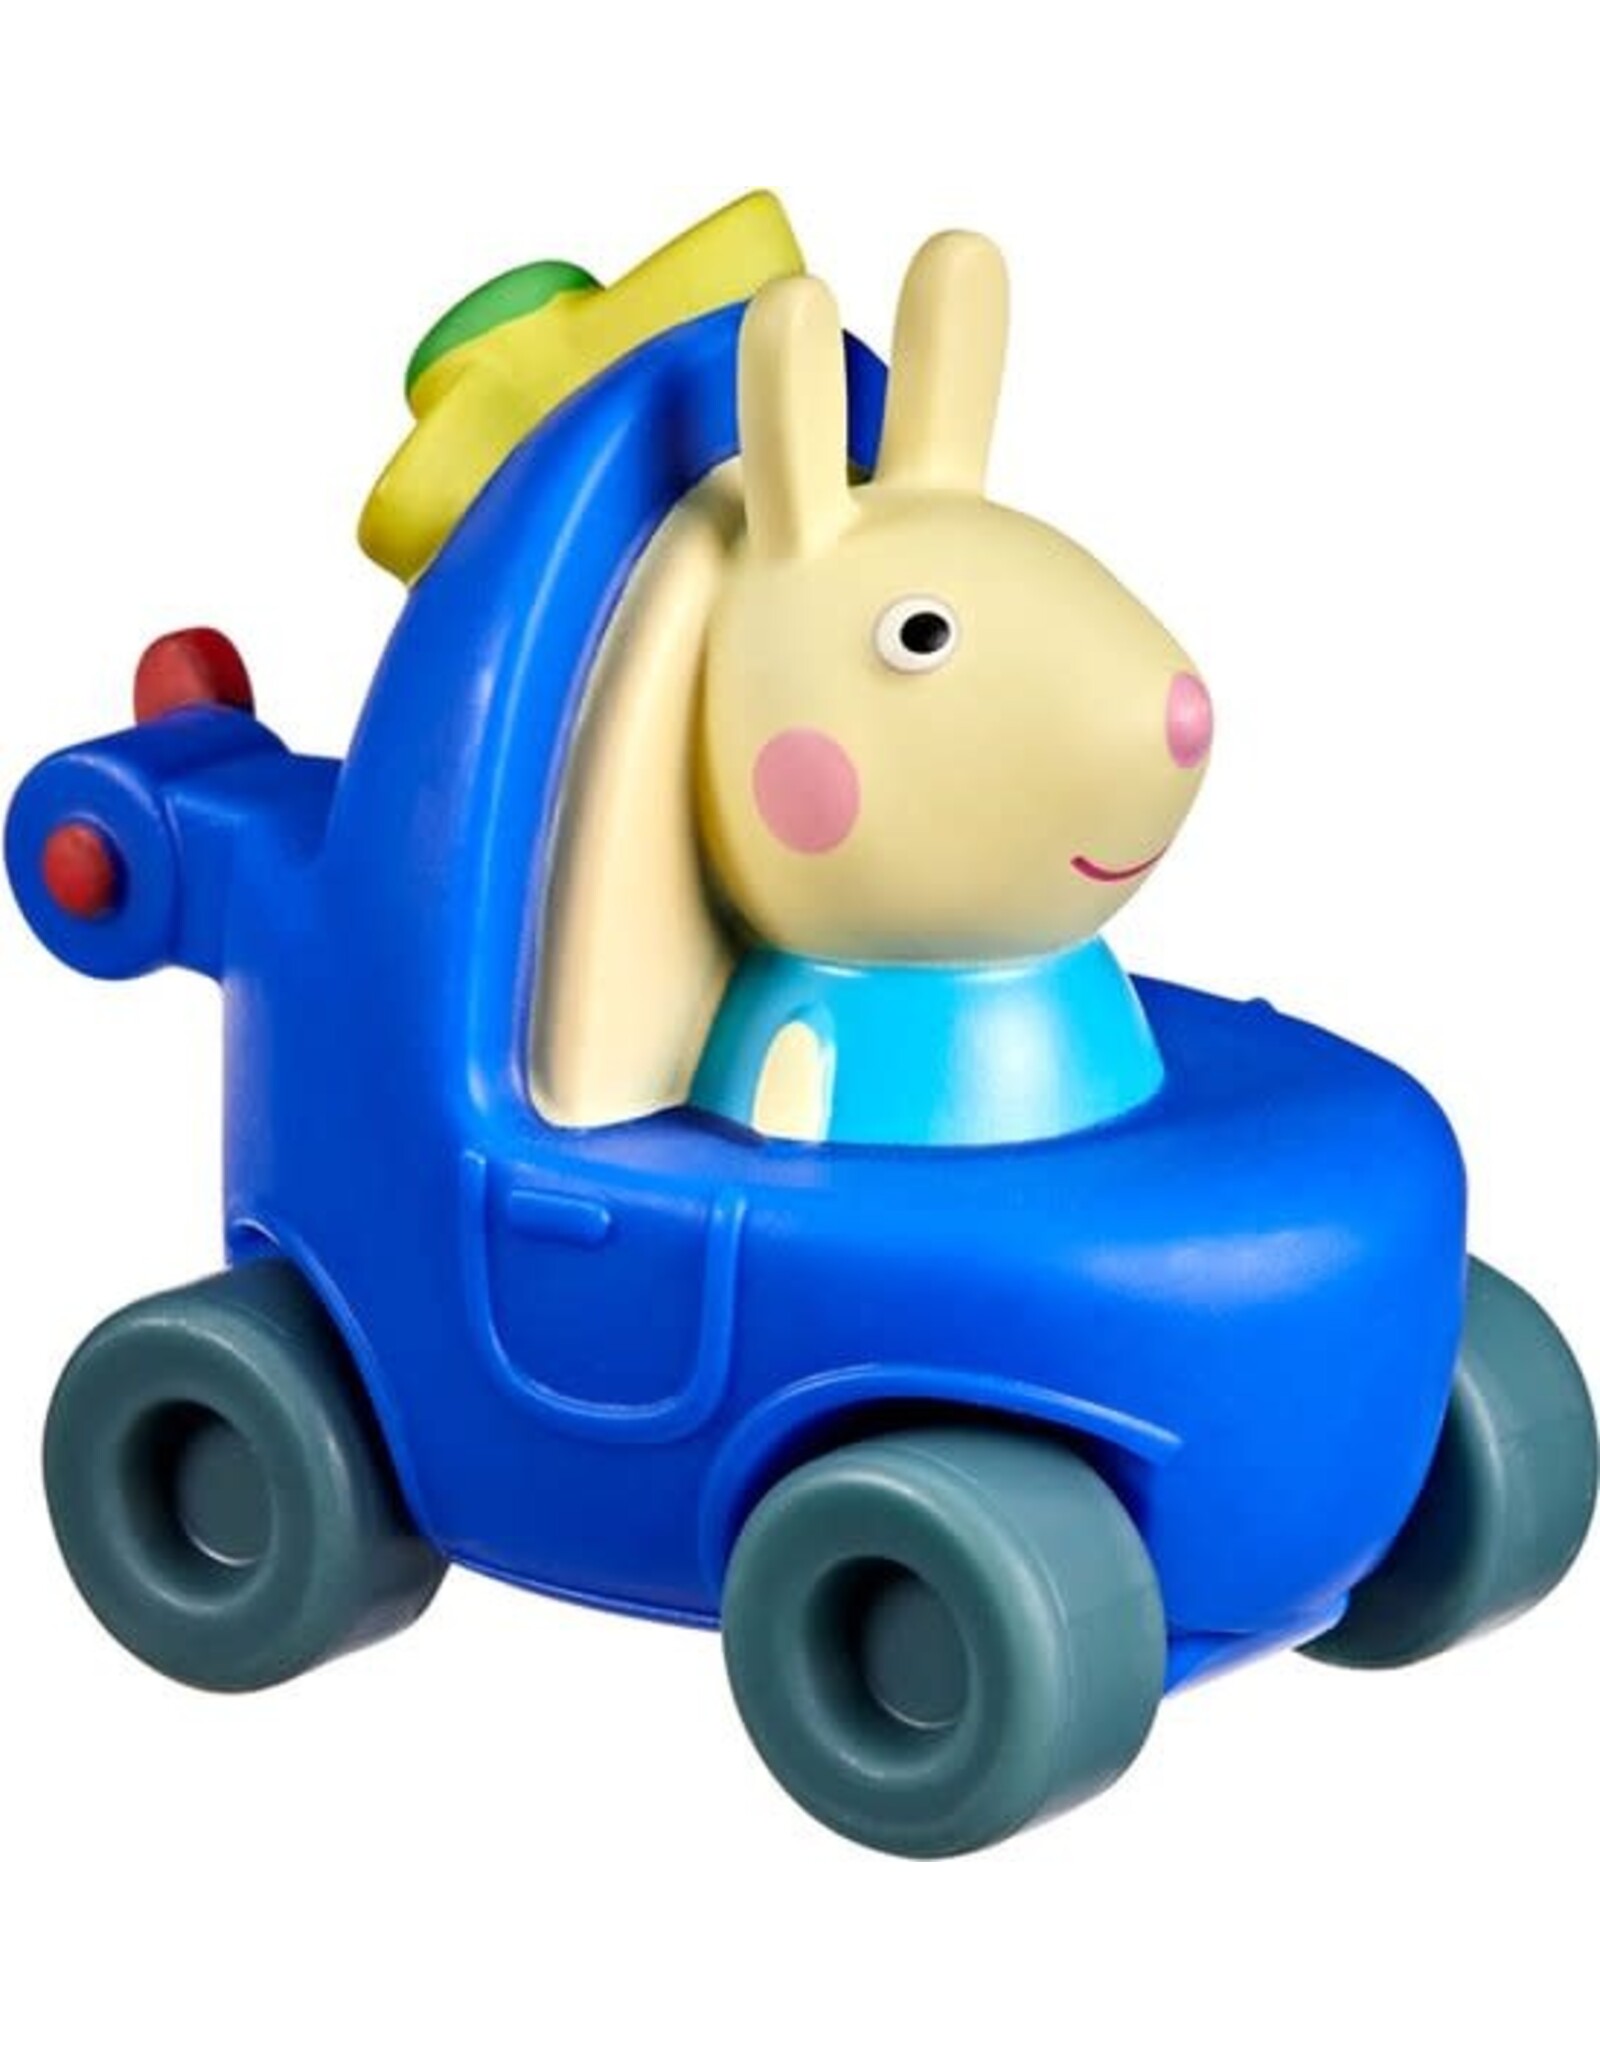 Hasbro peppa pig mini voertuigen - kelly konijn